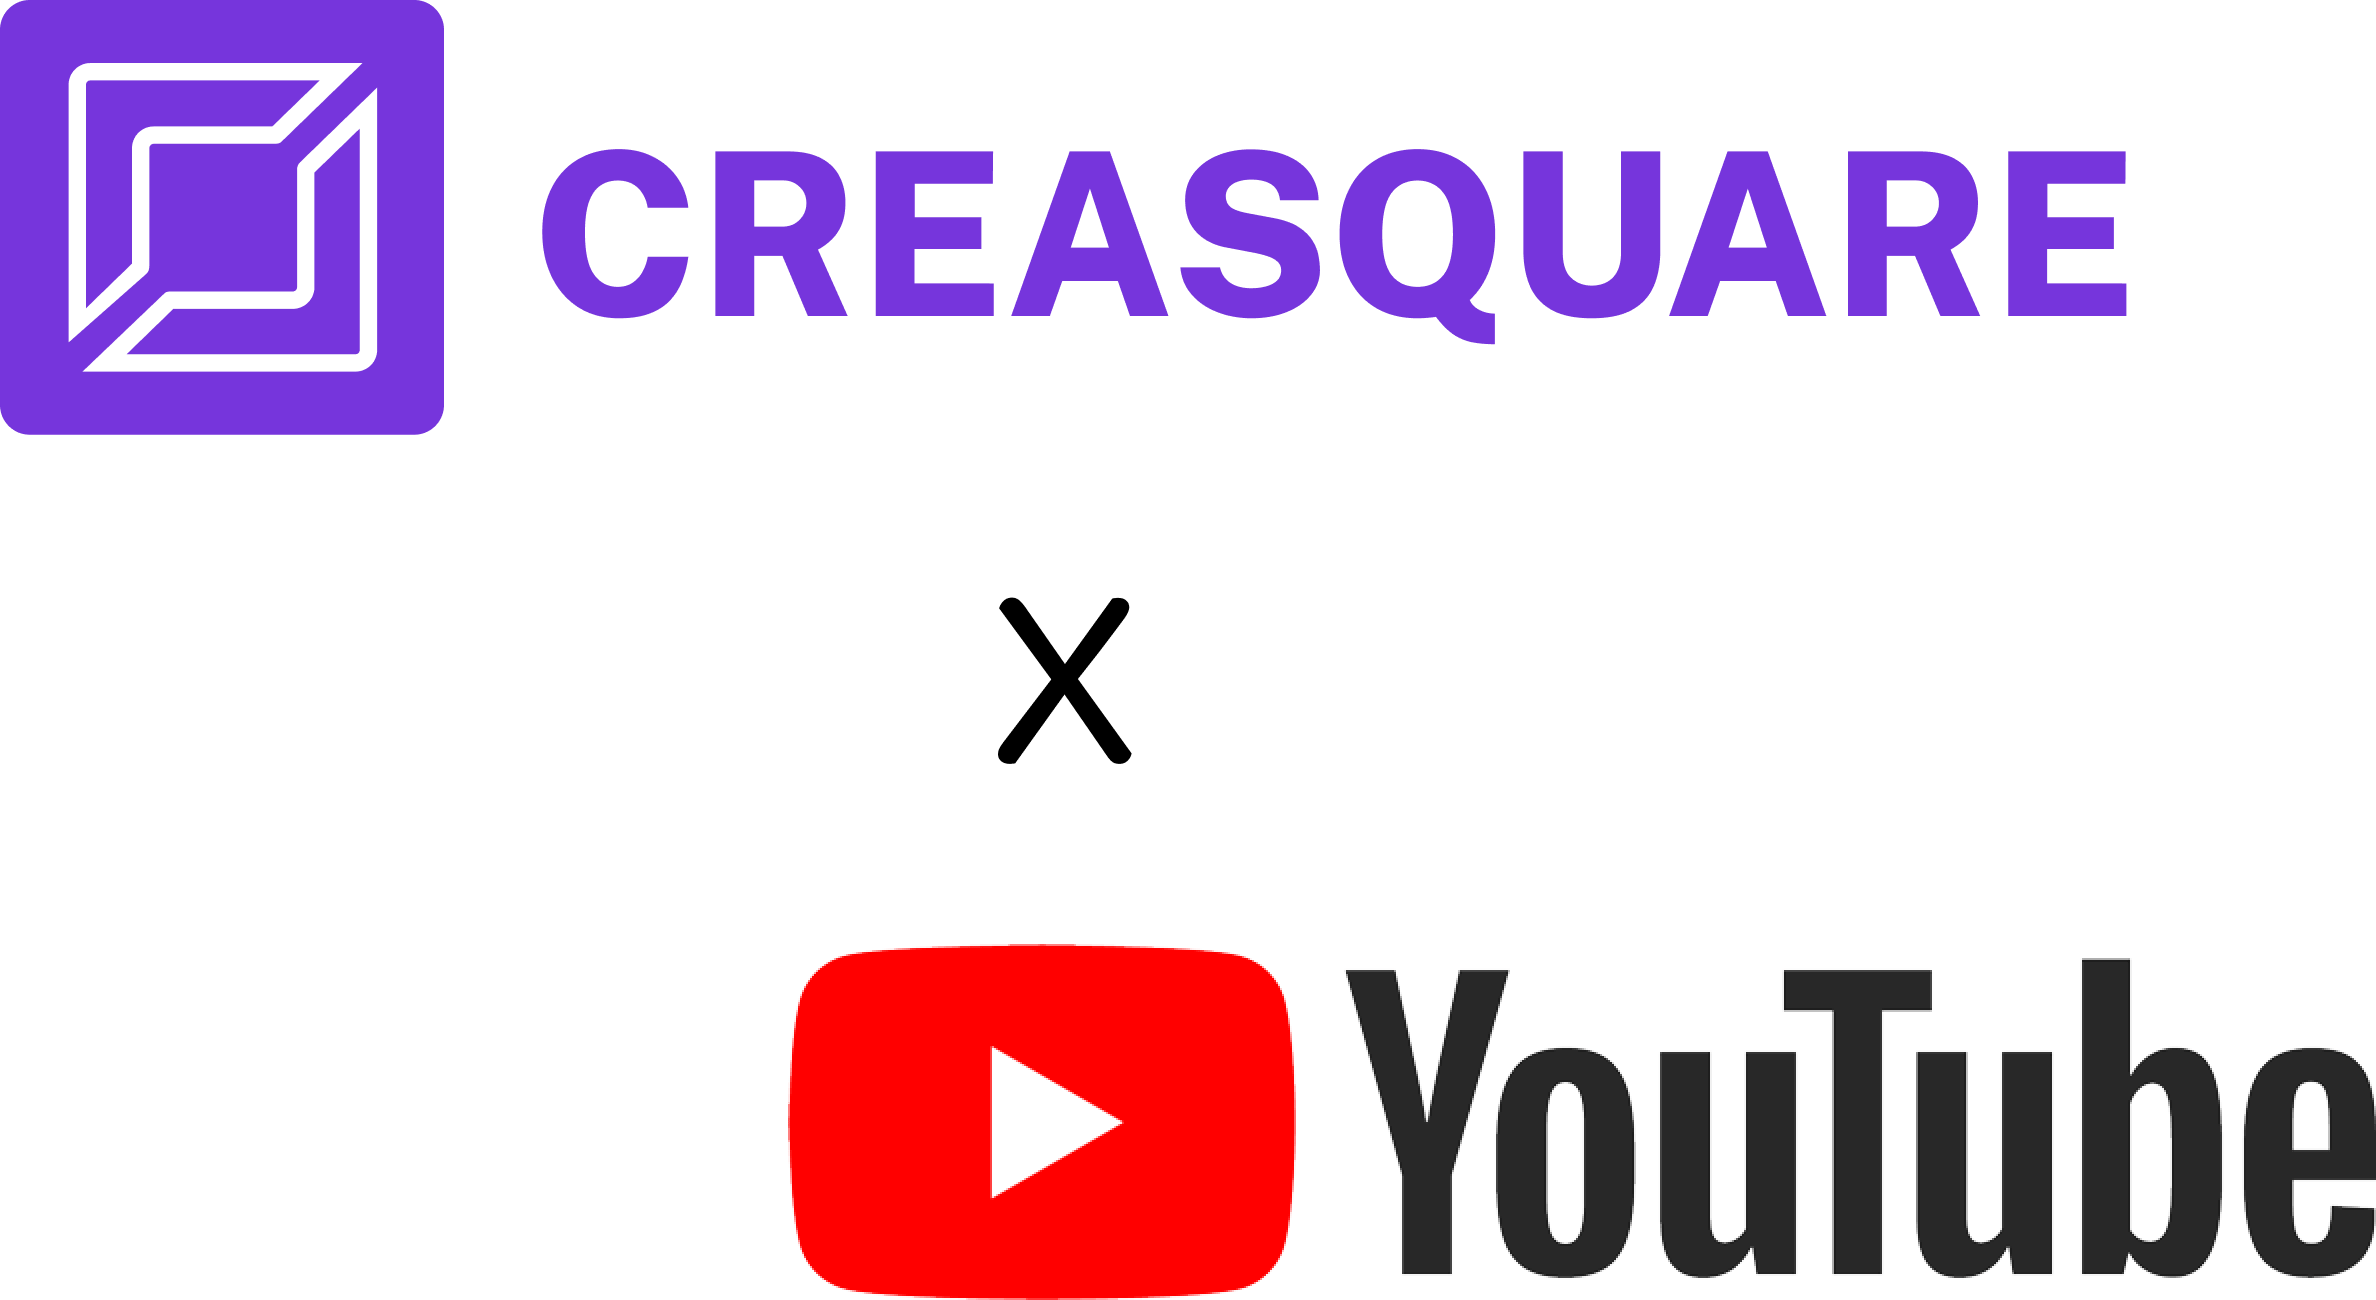 Logo Youtube and Creasquare